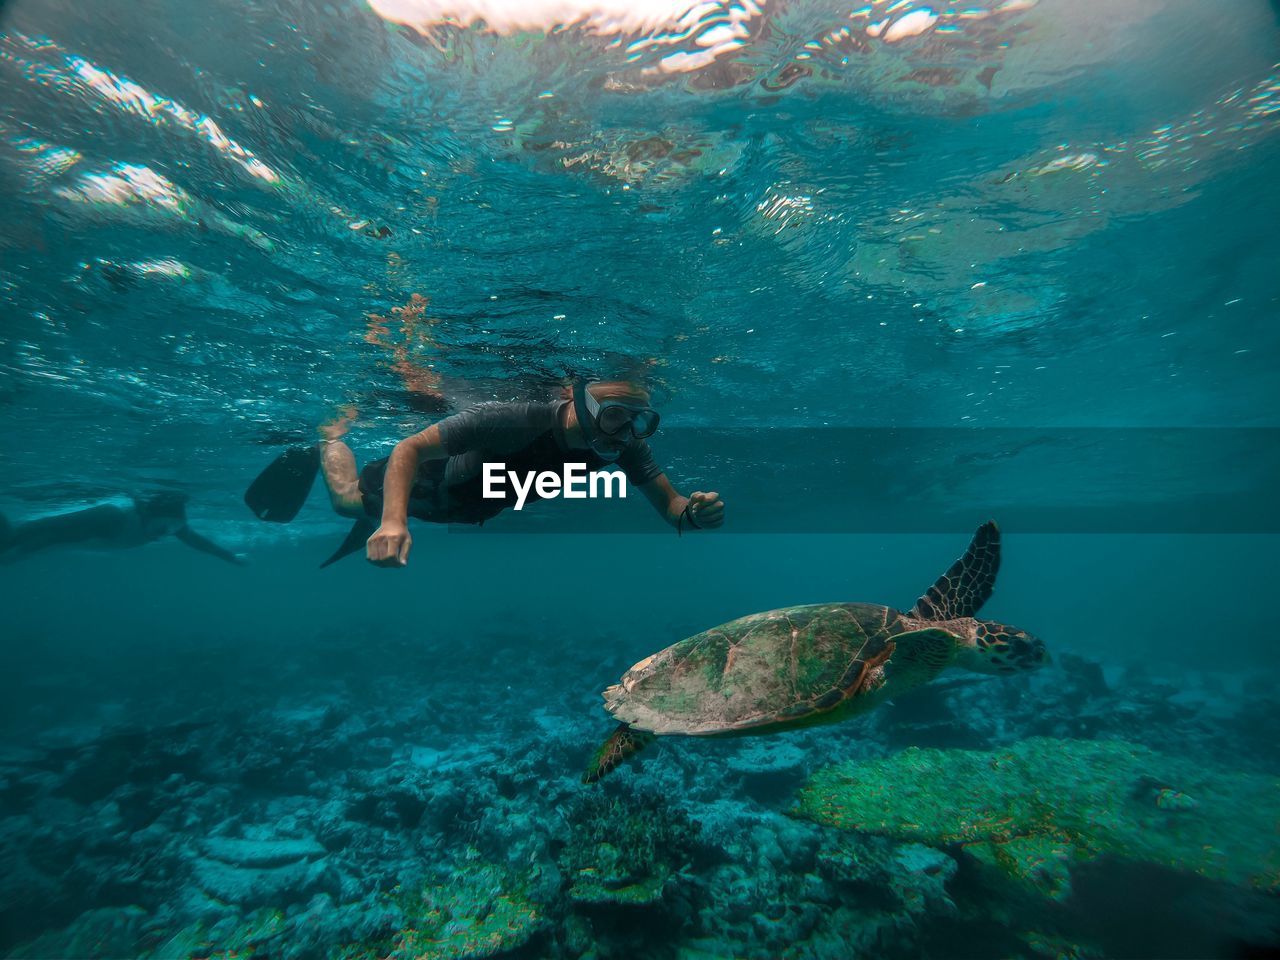 Man swimming by turtle undersea